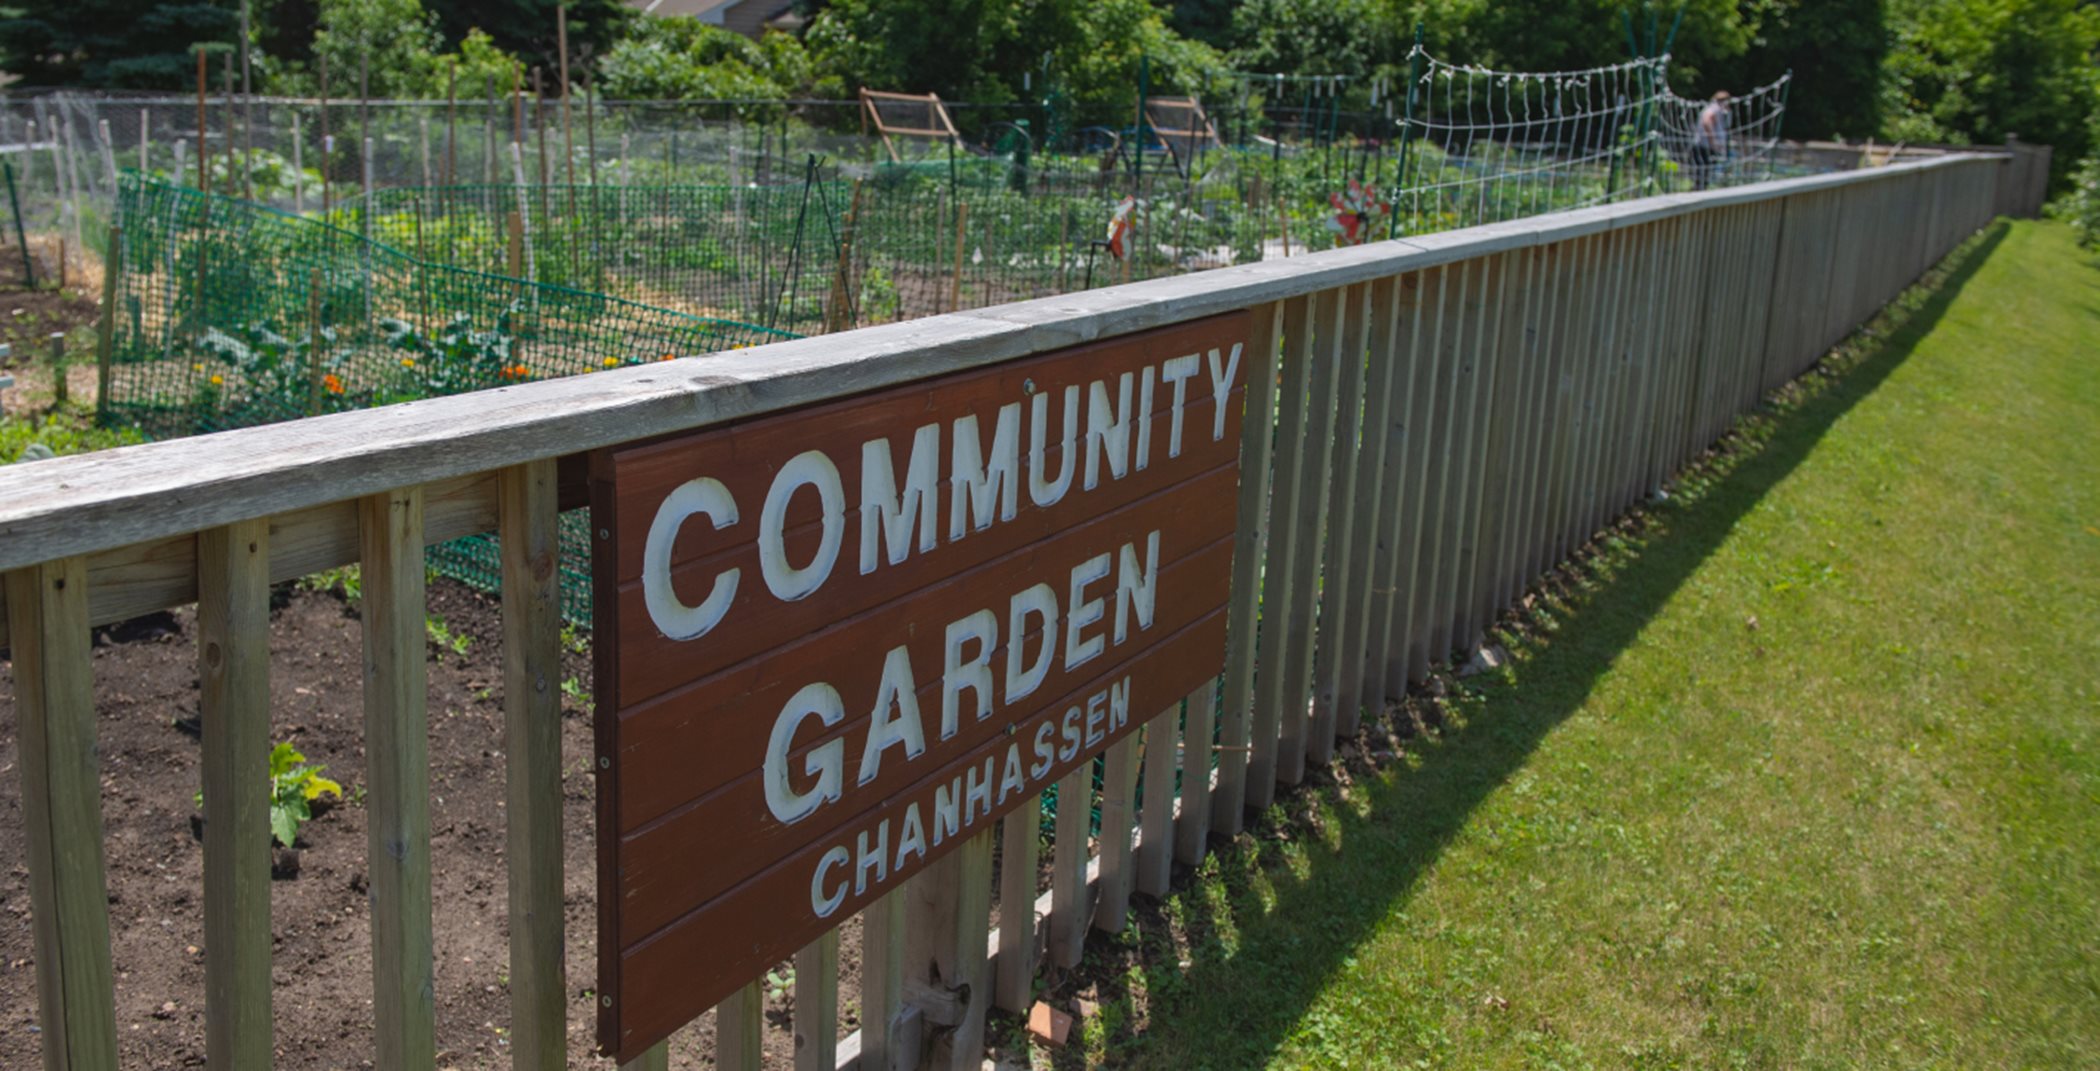 City of Chanhassen community gardens